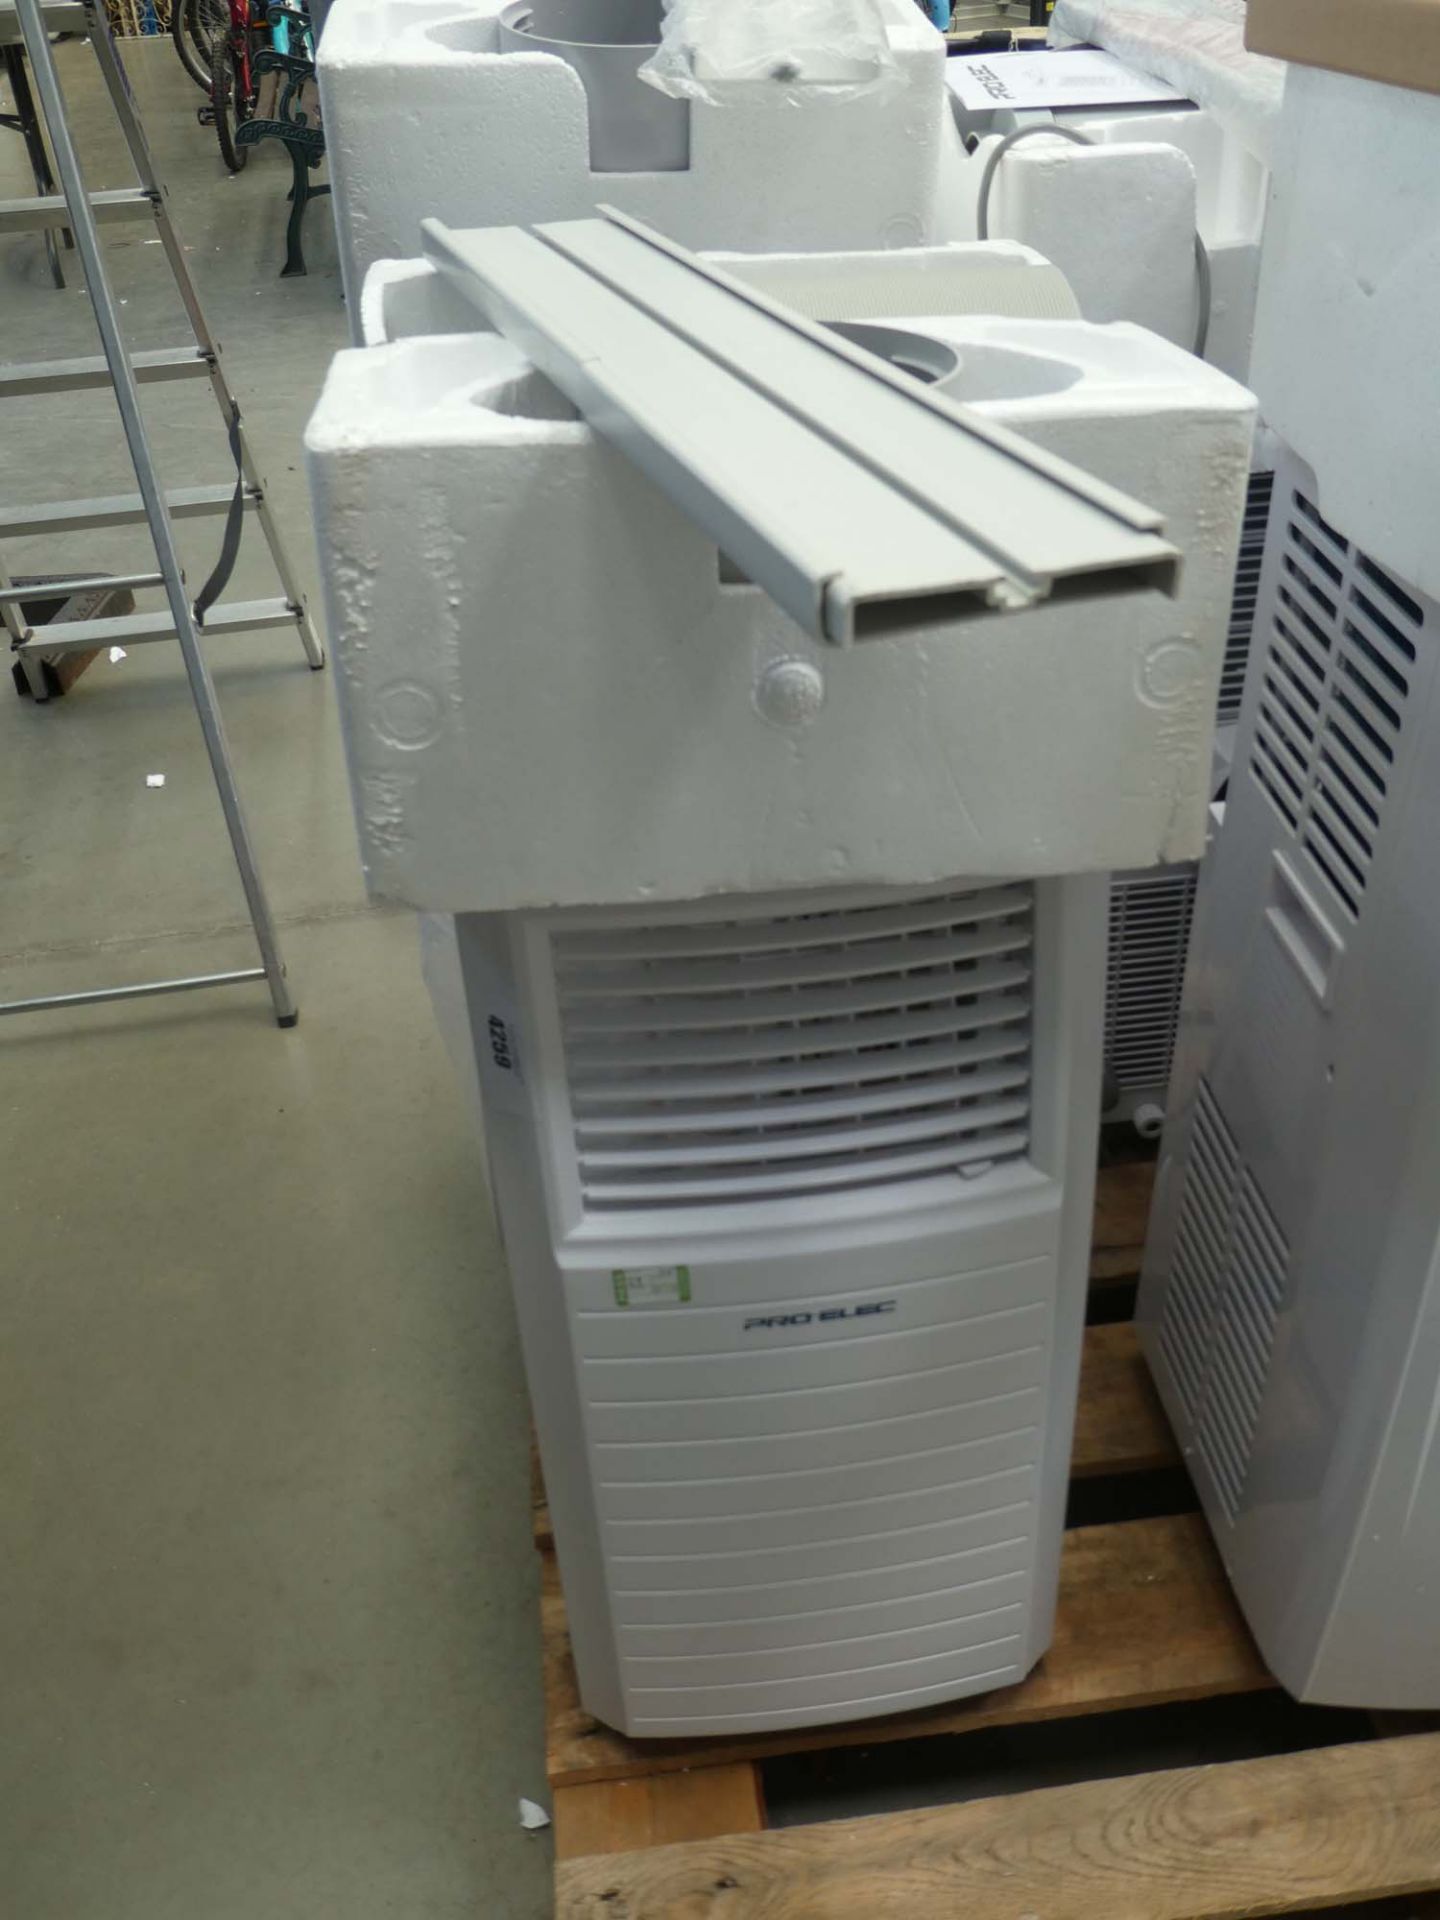 Pro Elec air conditioning unit